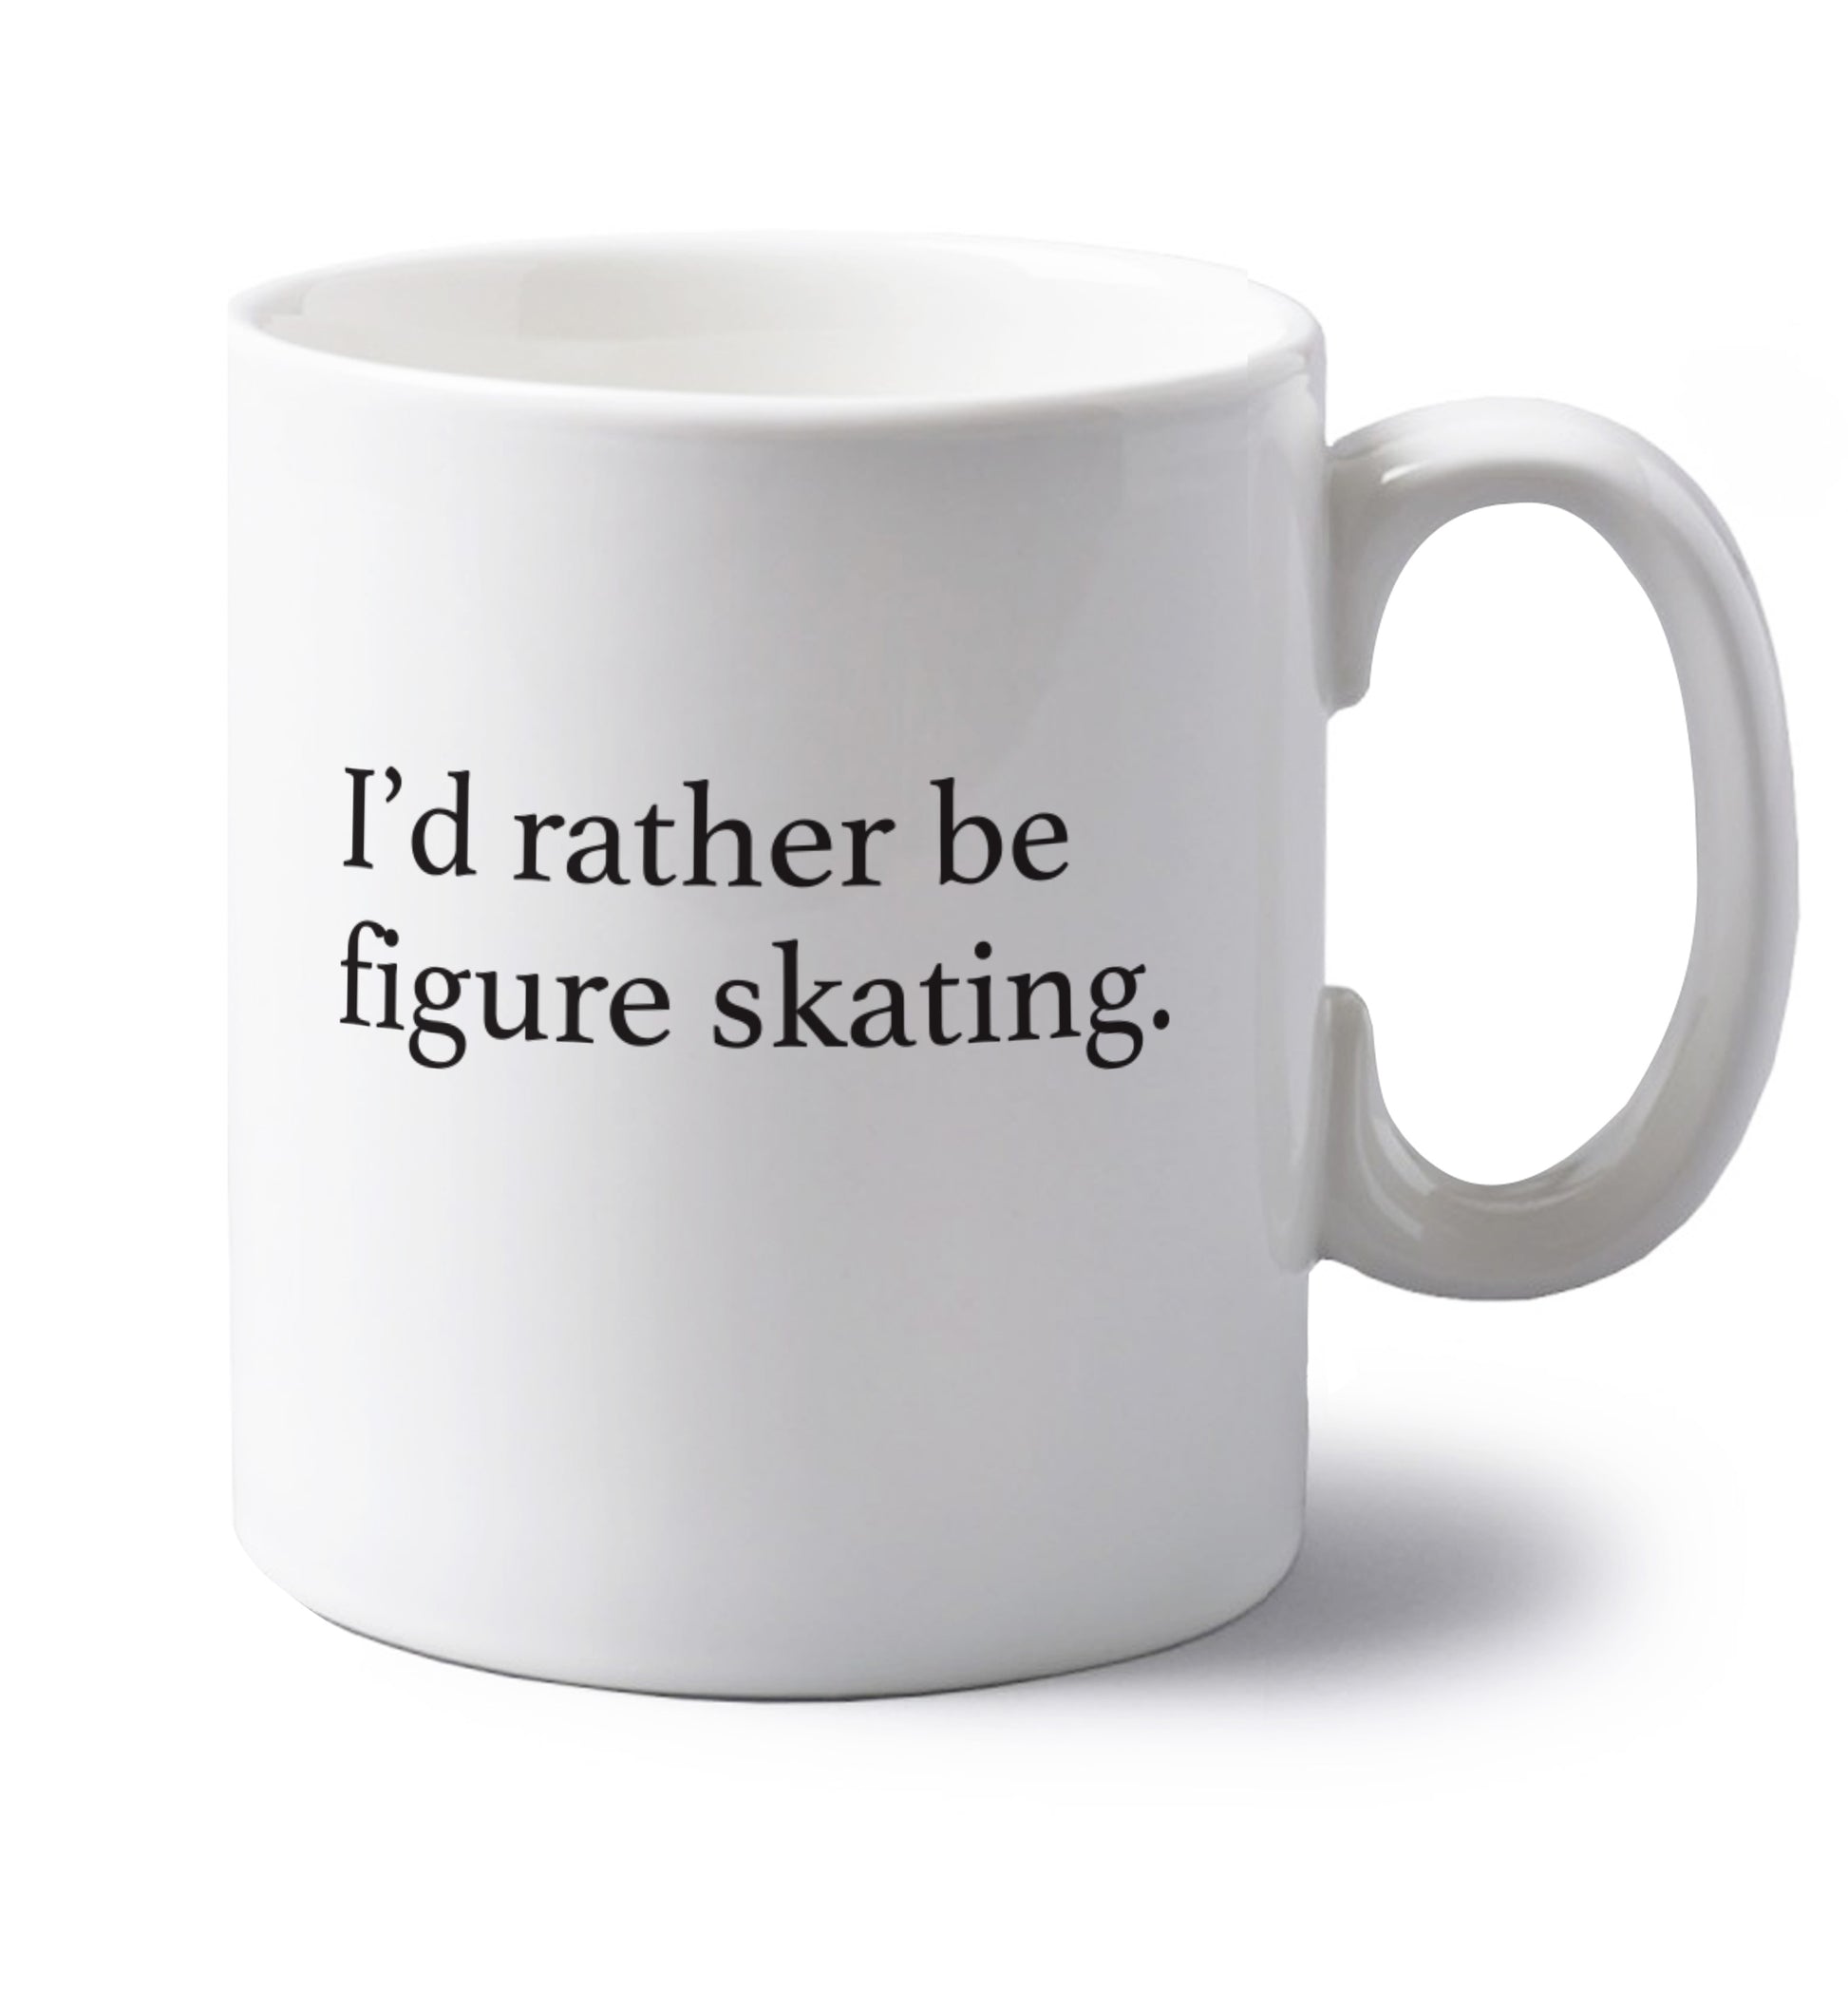 I'd rather be figure skating left handed white ceramic mug 